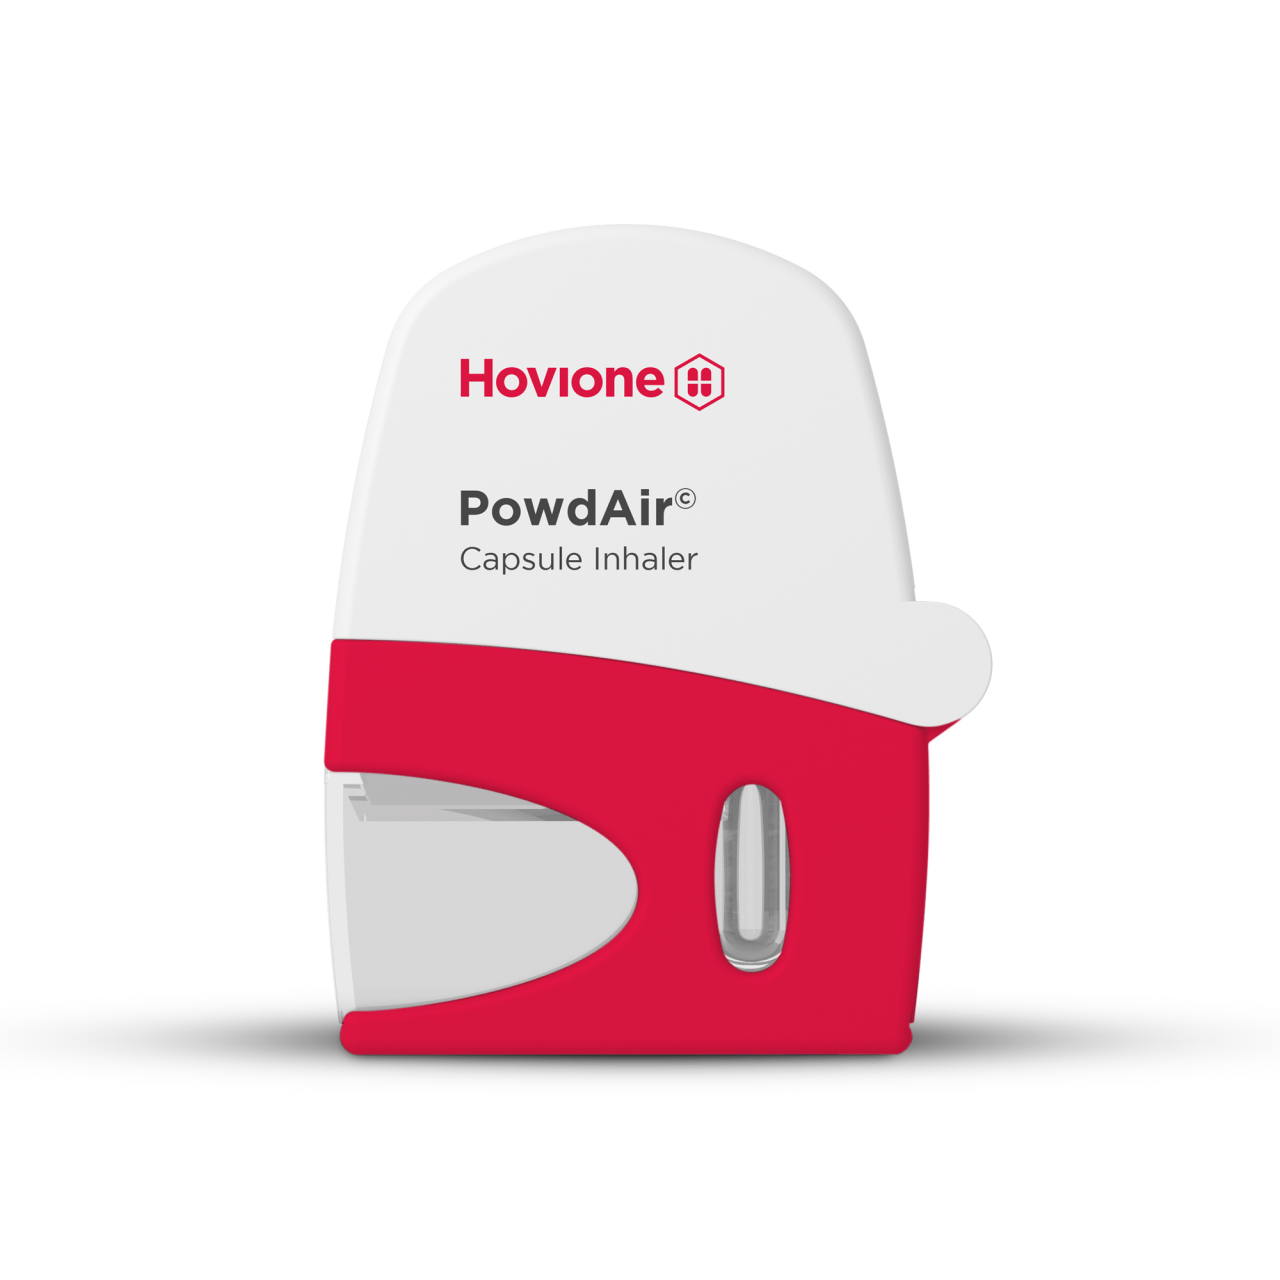 Powdair device DPI inhaler | Hovione